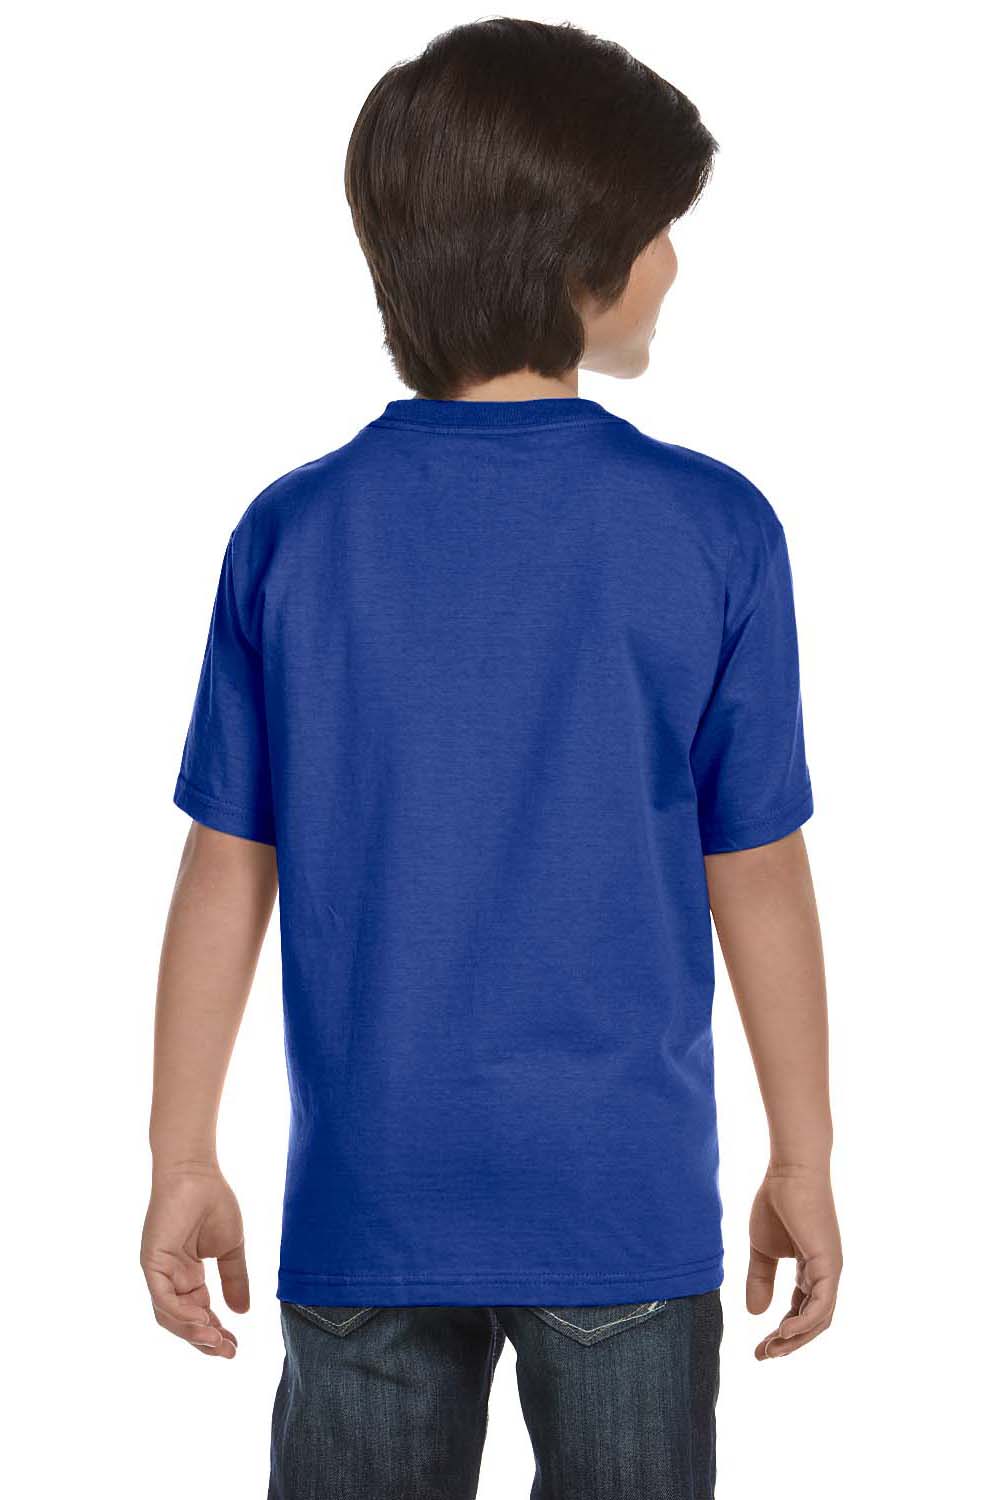 Hanes 5480 Youth ComfortSoft Short Sleeve Crewneck T-Shirt Royal Blue Back